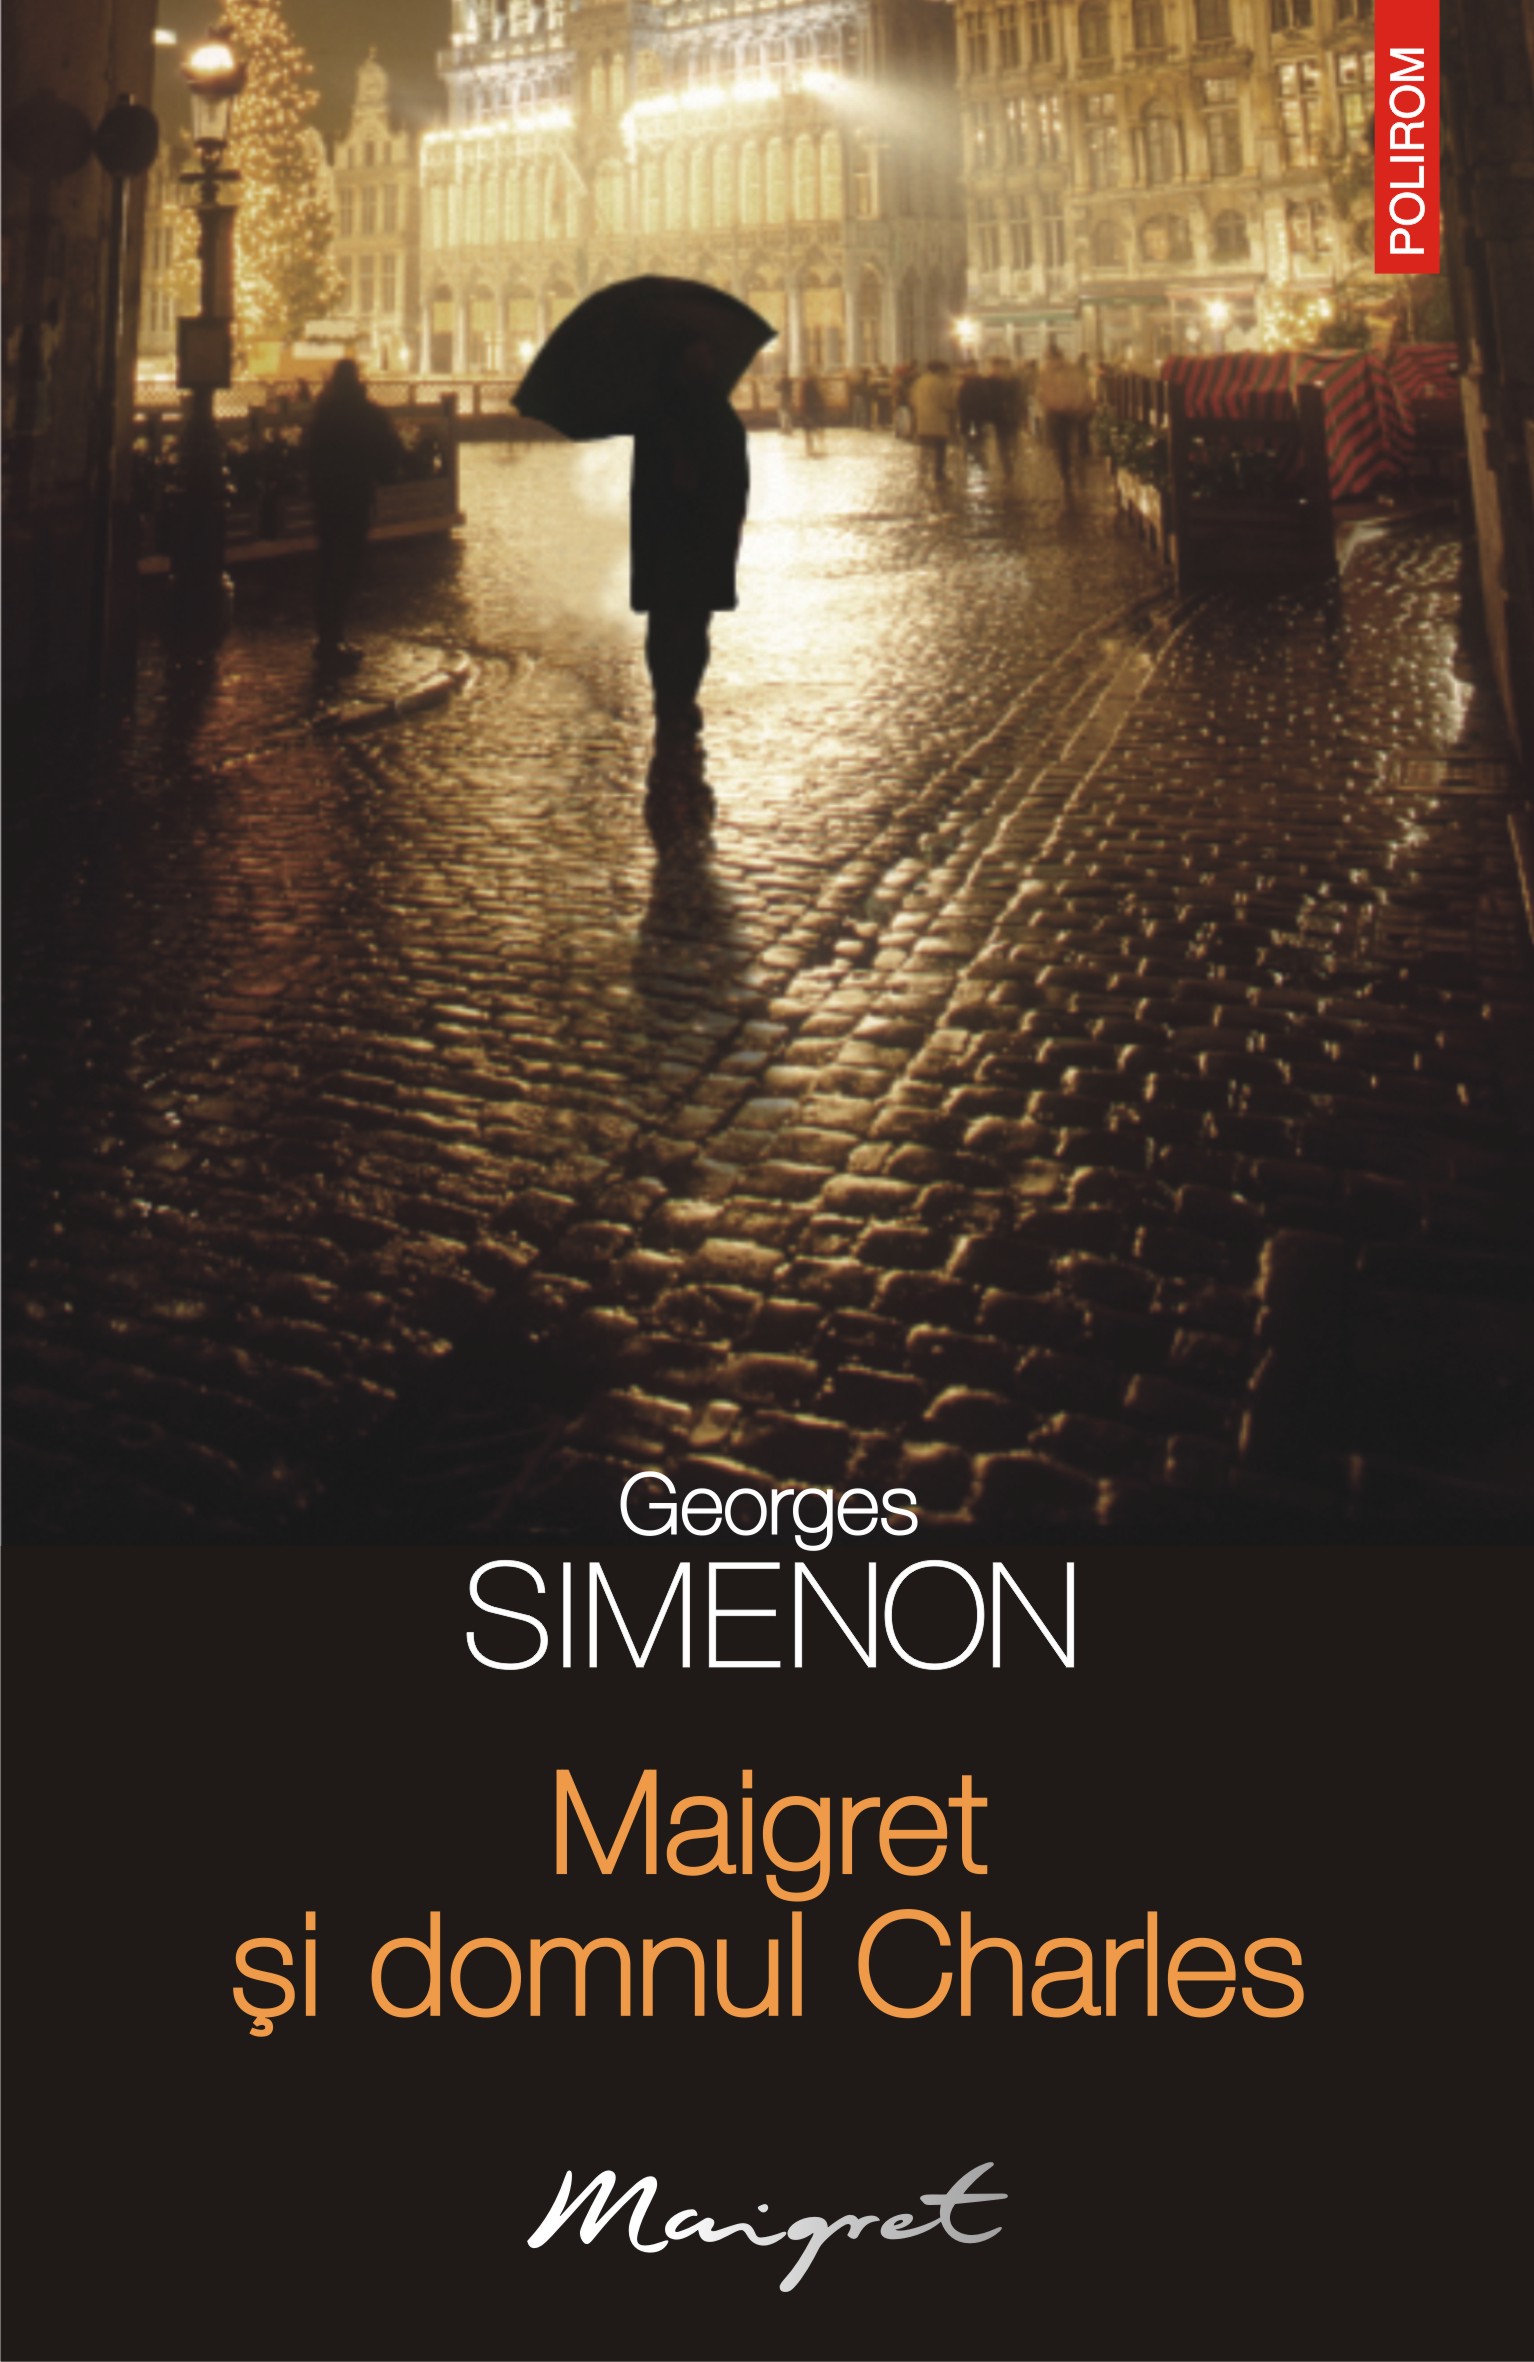 eBook Maigret si domnul Charles - Georges Simenon